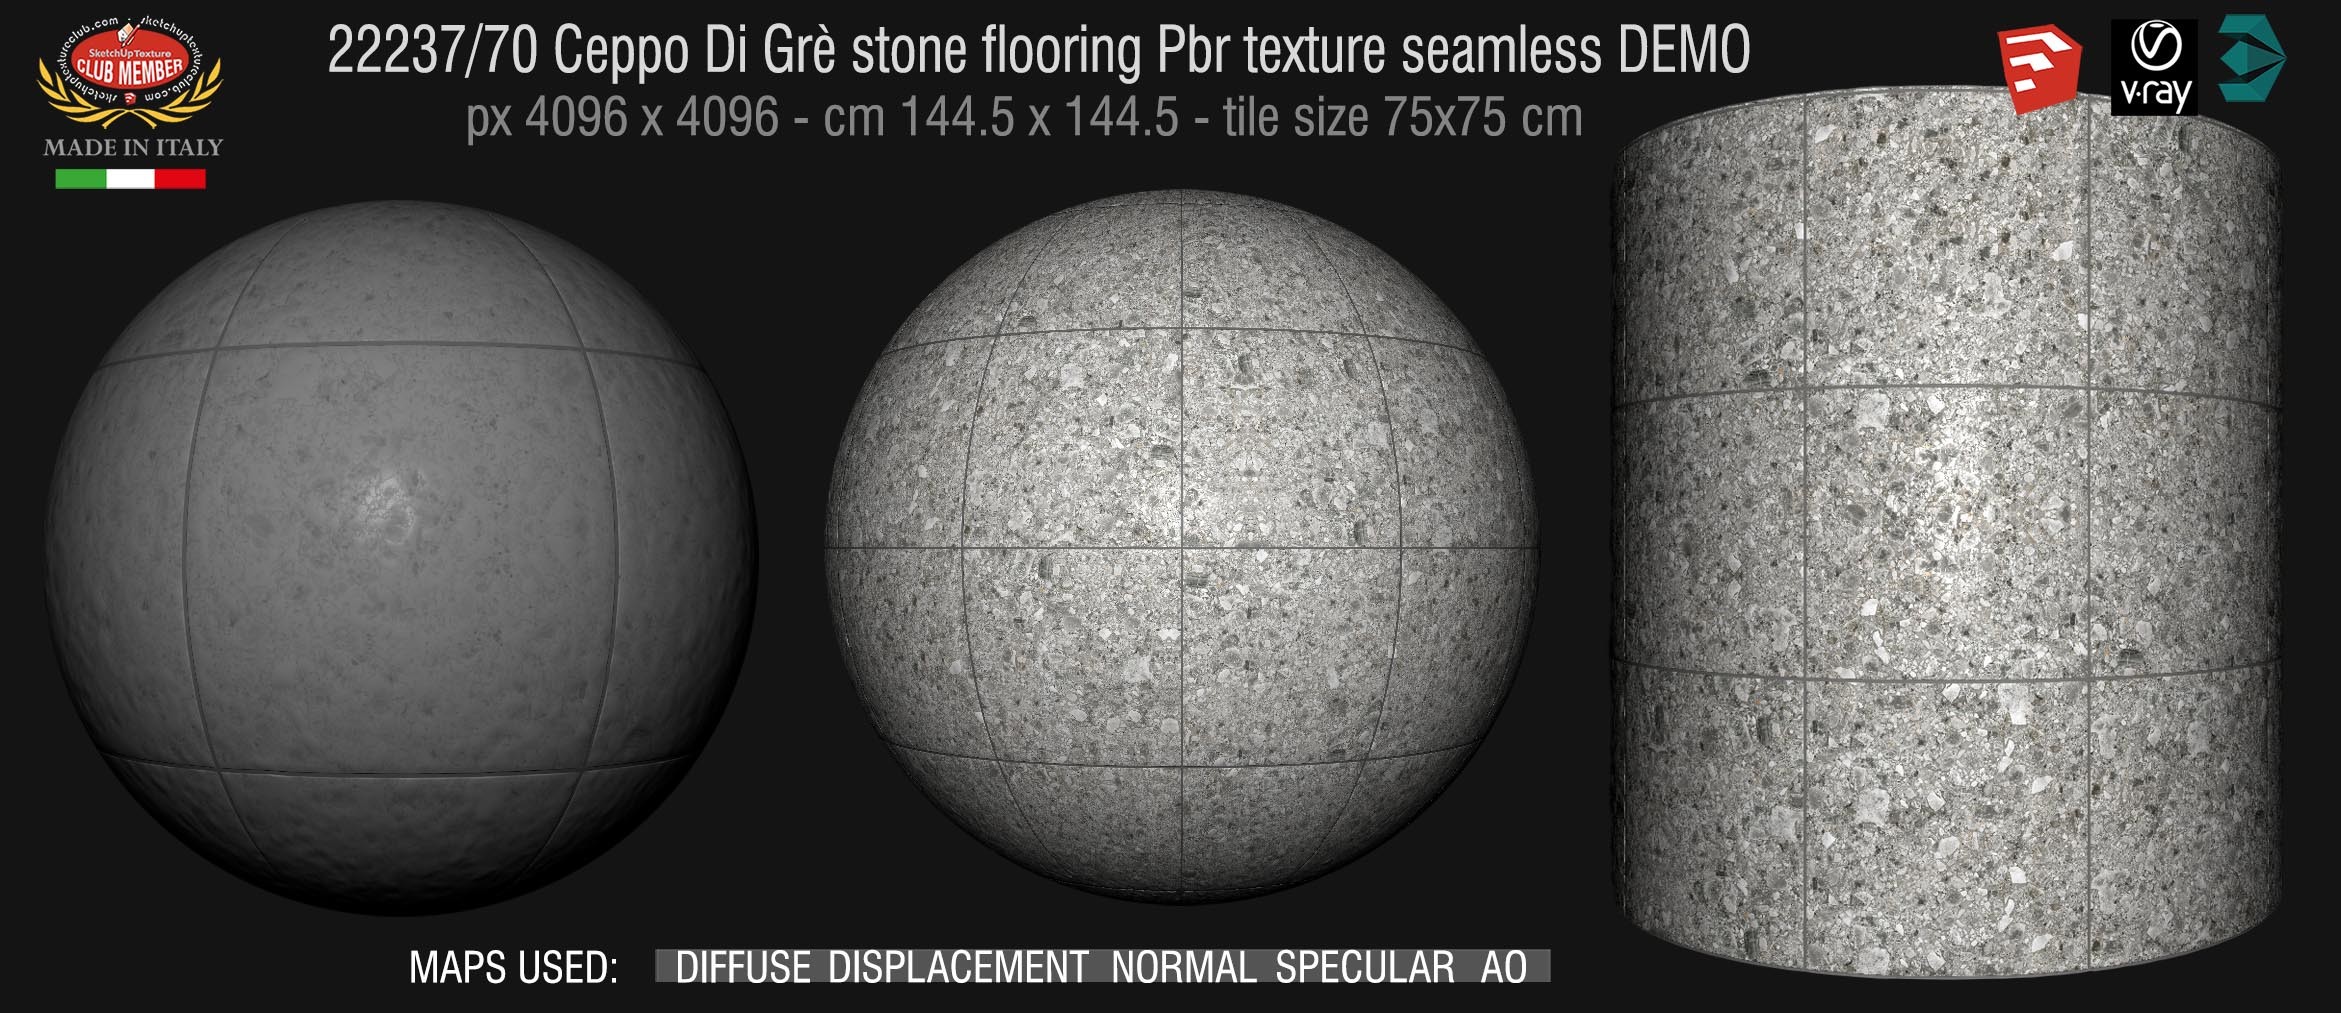 22237_70 Ceppo Di Grè stone flooring Pbr texture seamless DEMO - INTERIOR / OUTDOOR Paving - tile size 75x75 cm